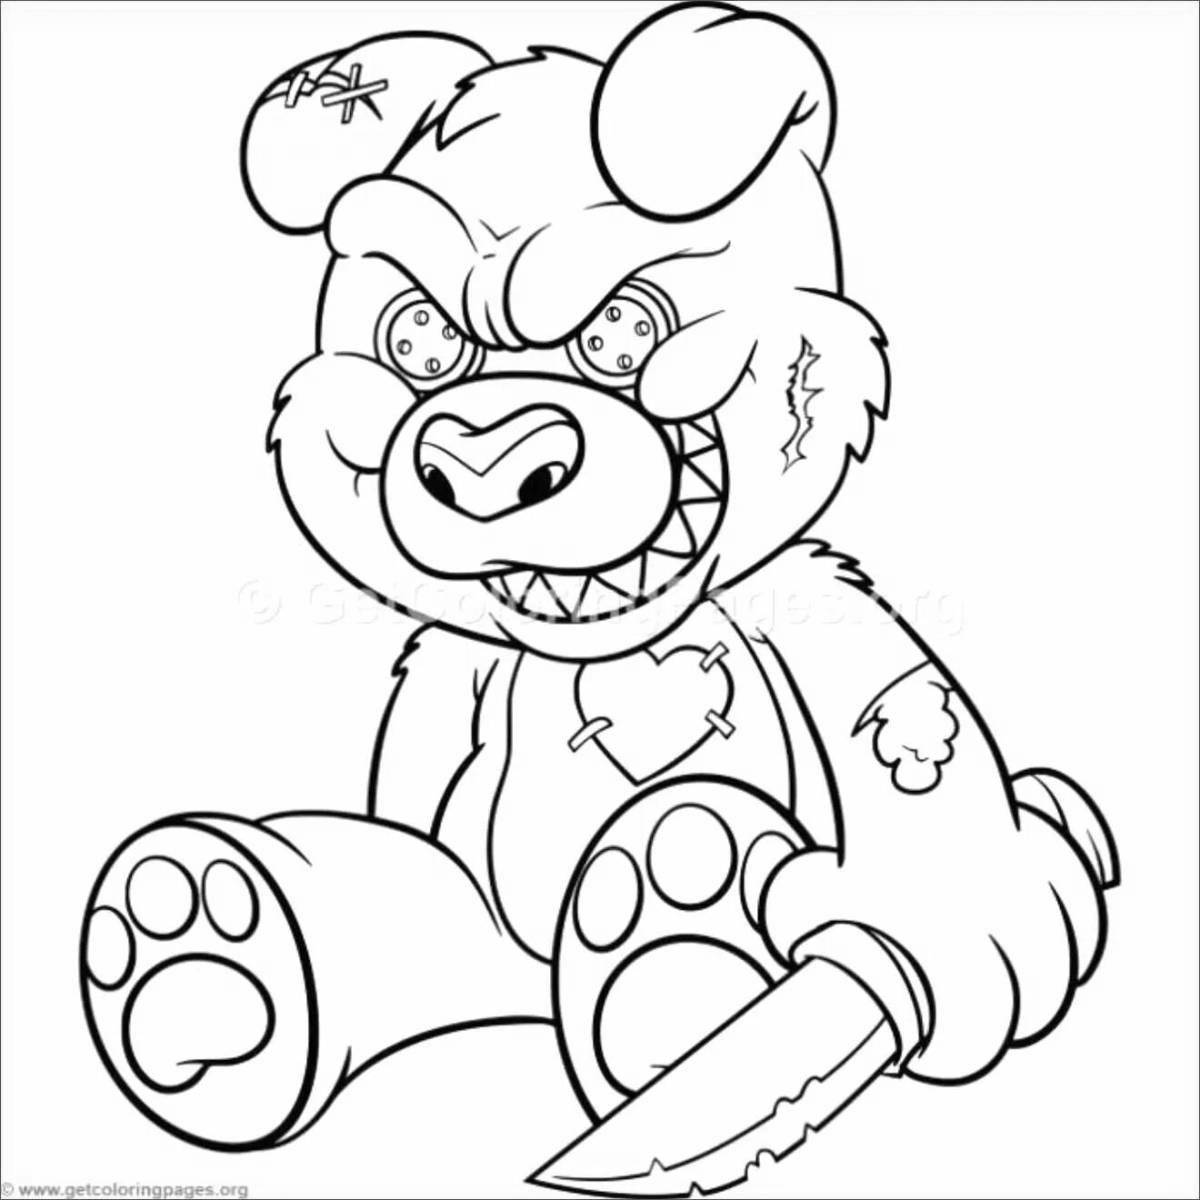 Angry bear flaming coloring page